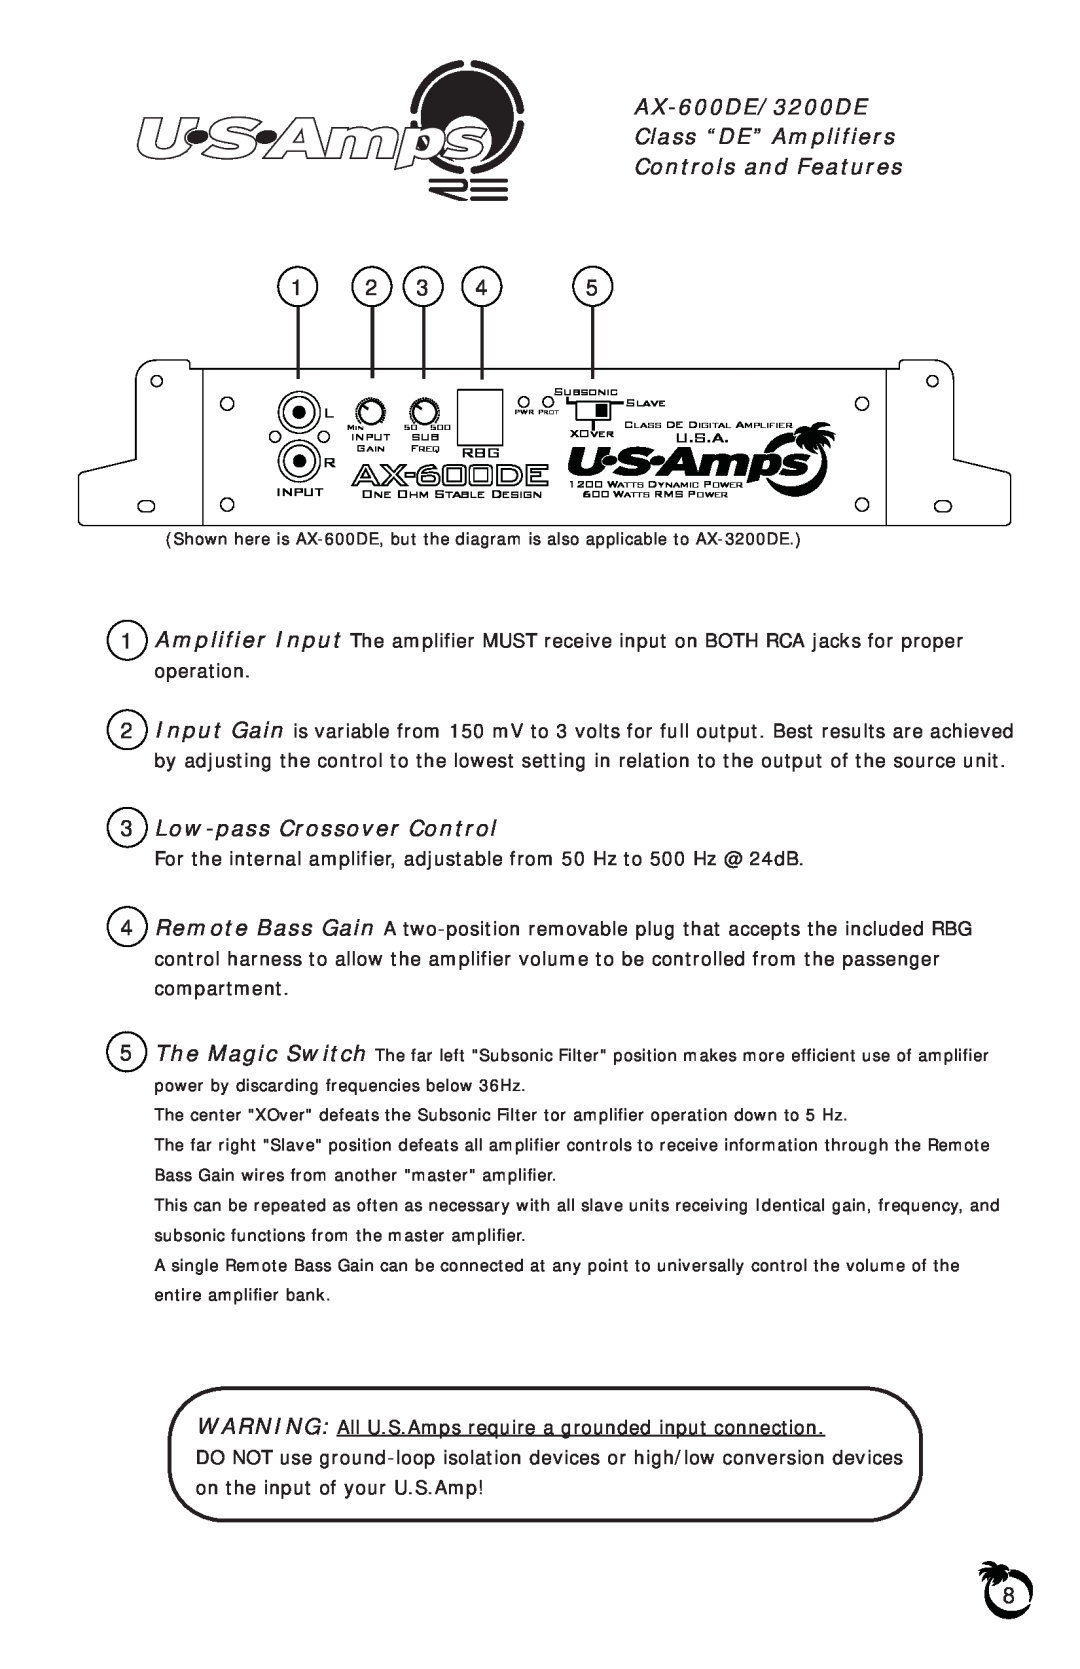 US Amps owner manual AX-600DE/3200DE, Low-pass Crossover Control, Class “DE” Amplifiers, Controls and Features 